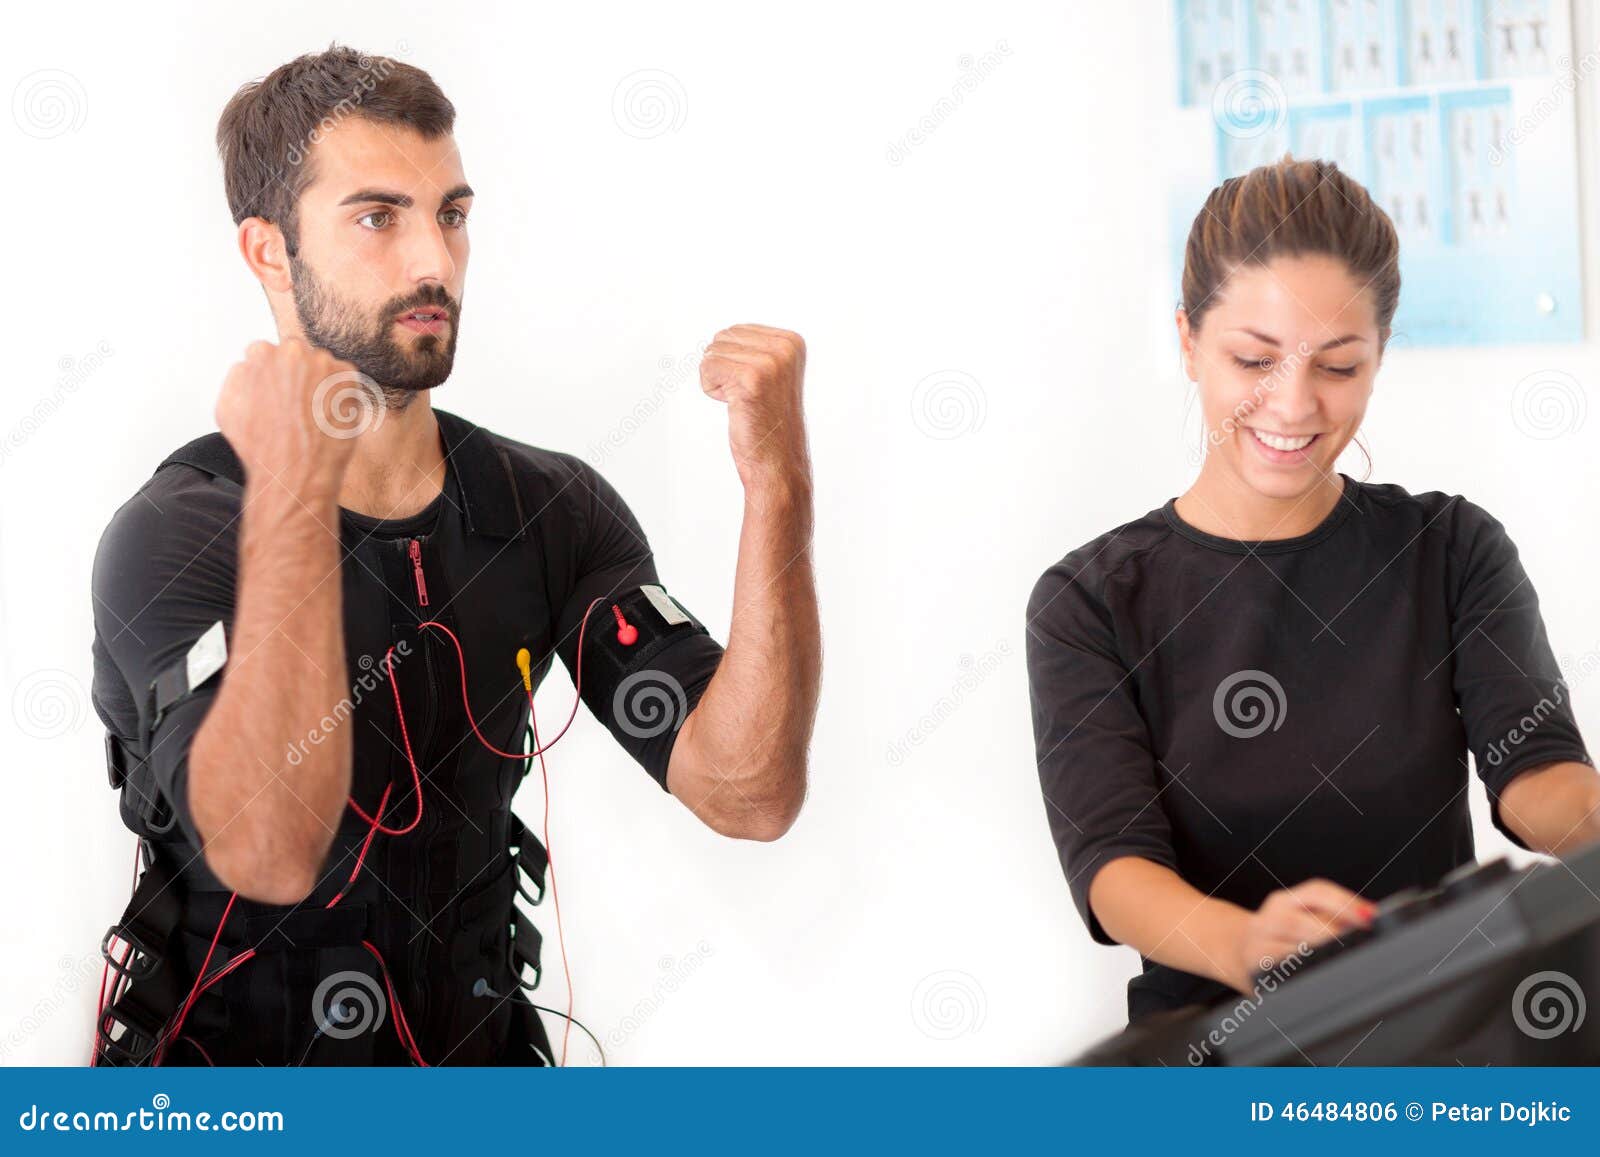 female coach giving man ems electro muscular stimulation exercise